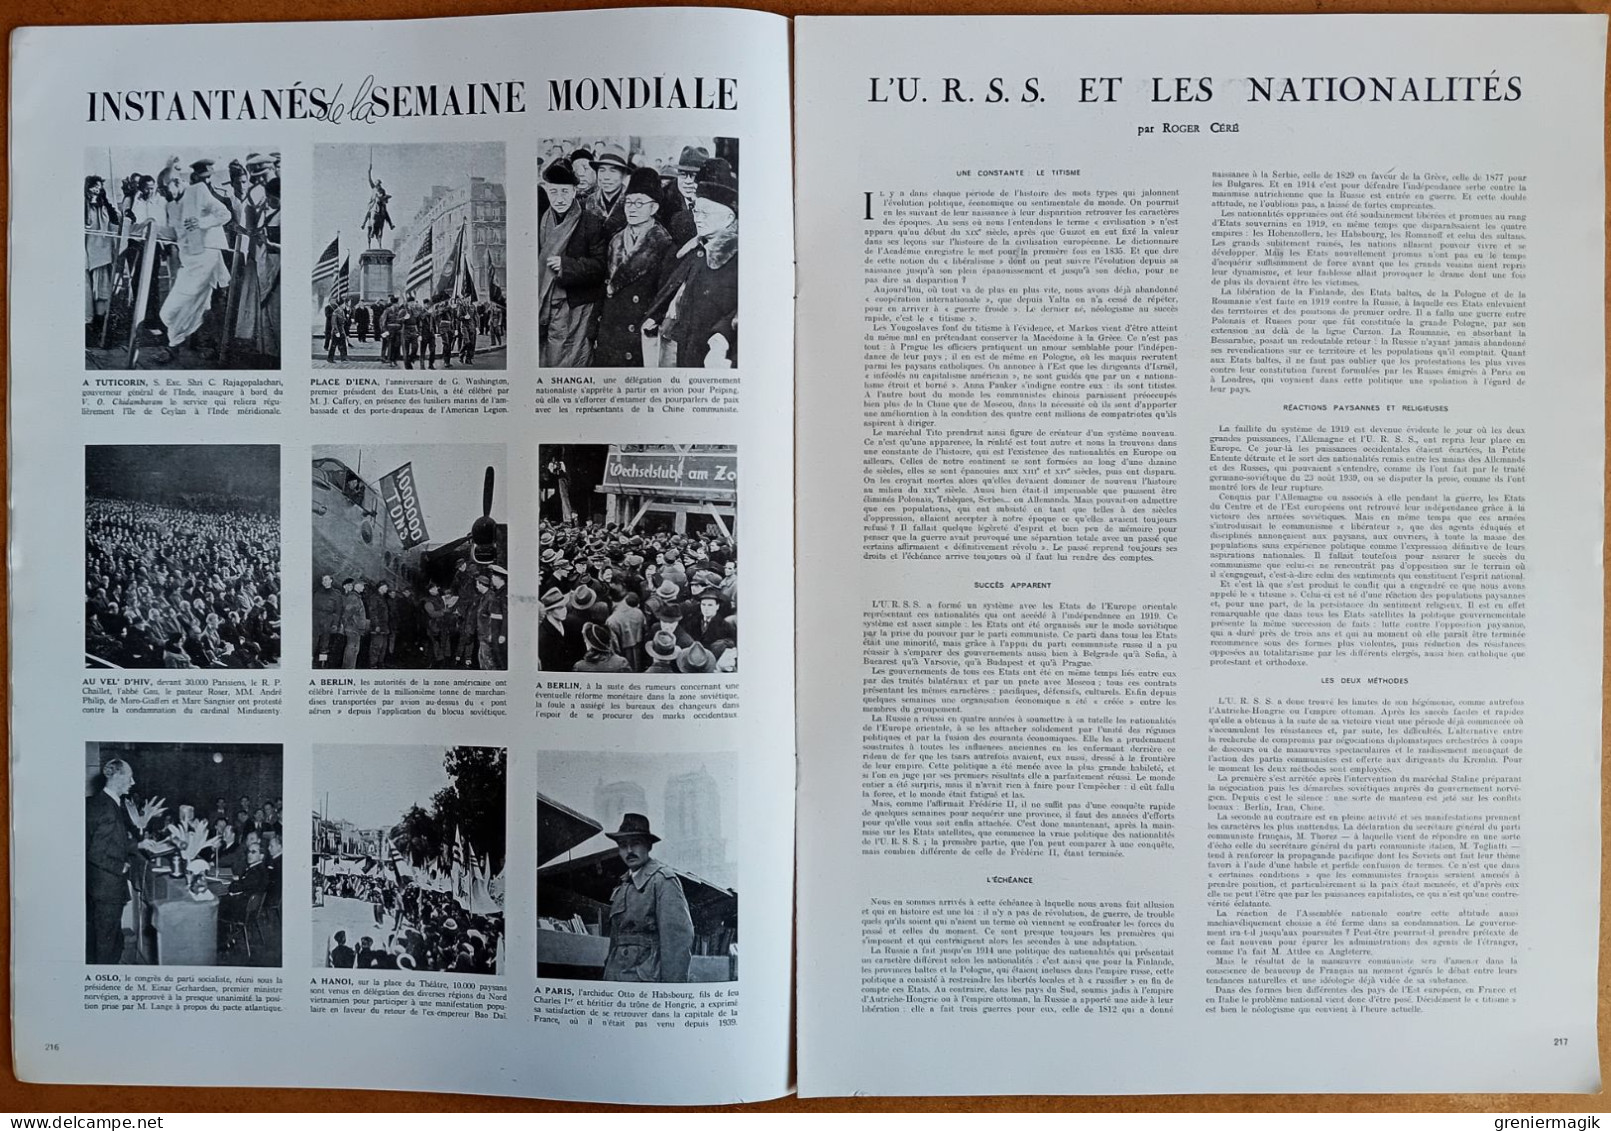 France Illustration N°177 05/03/1949 Népal/Ile Maurice/Joséphine Baker/Supervielle/Proust/Salon Arts Ménagers/Israël - Allgemeine Literatur